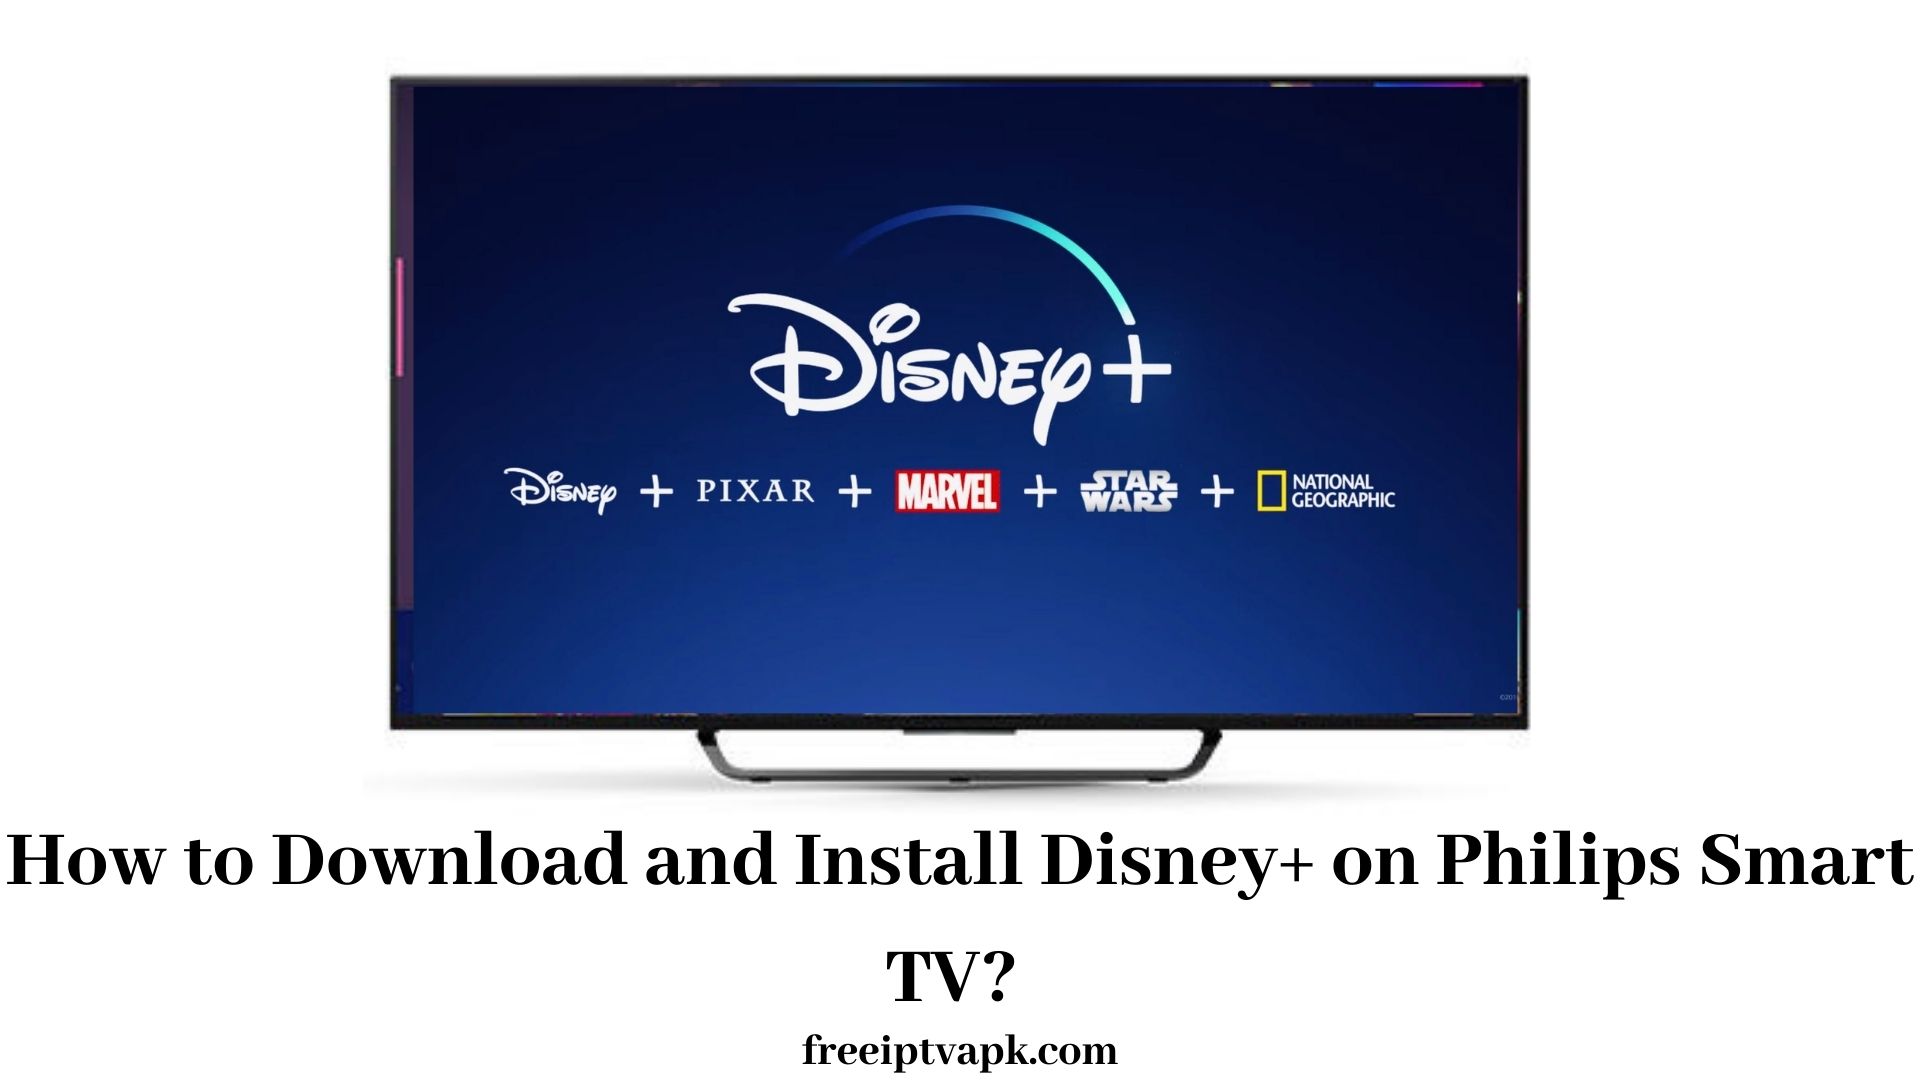 Disney+ on Philips Smart TV